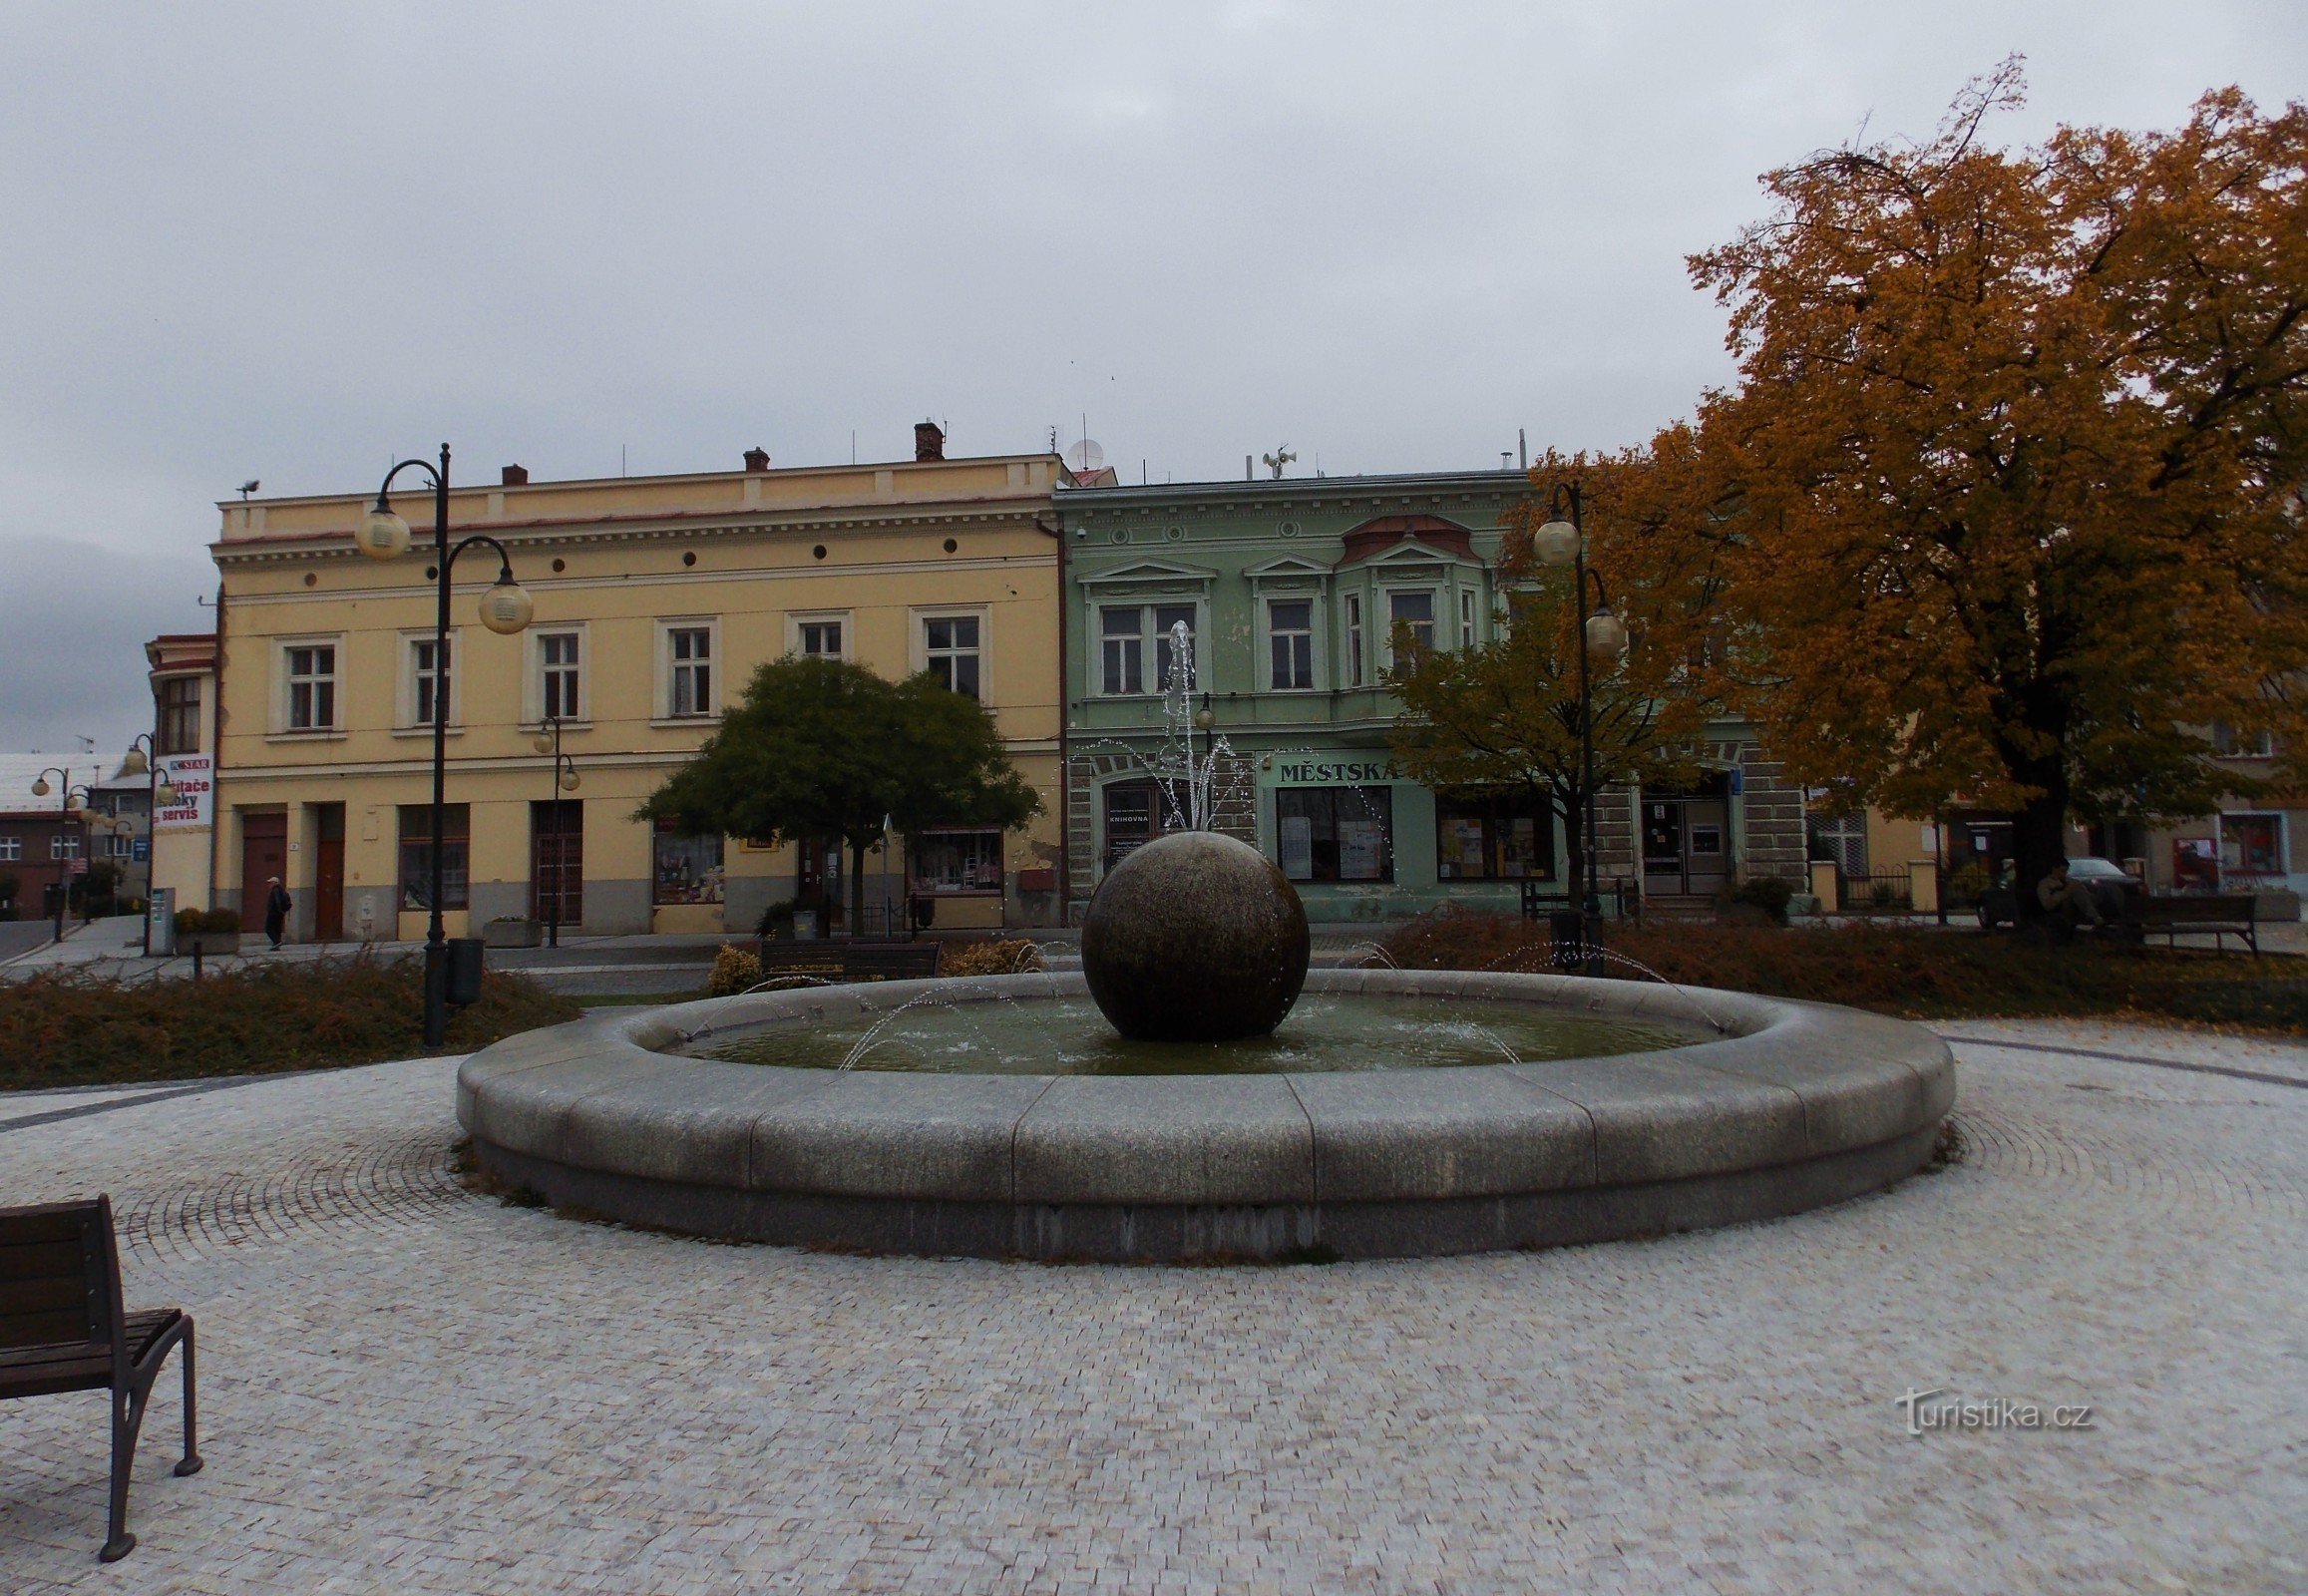 Det dominerende træk ved Holešovský náměstí er det cirkulære springvand